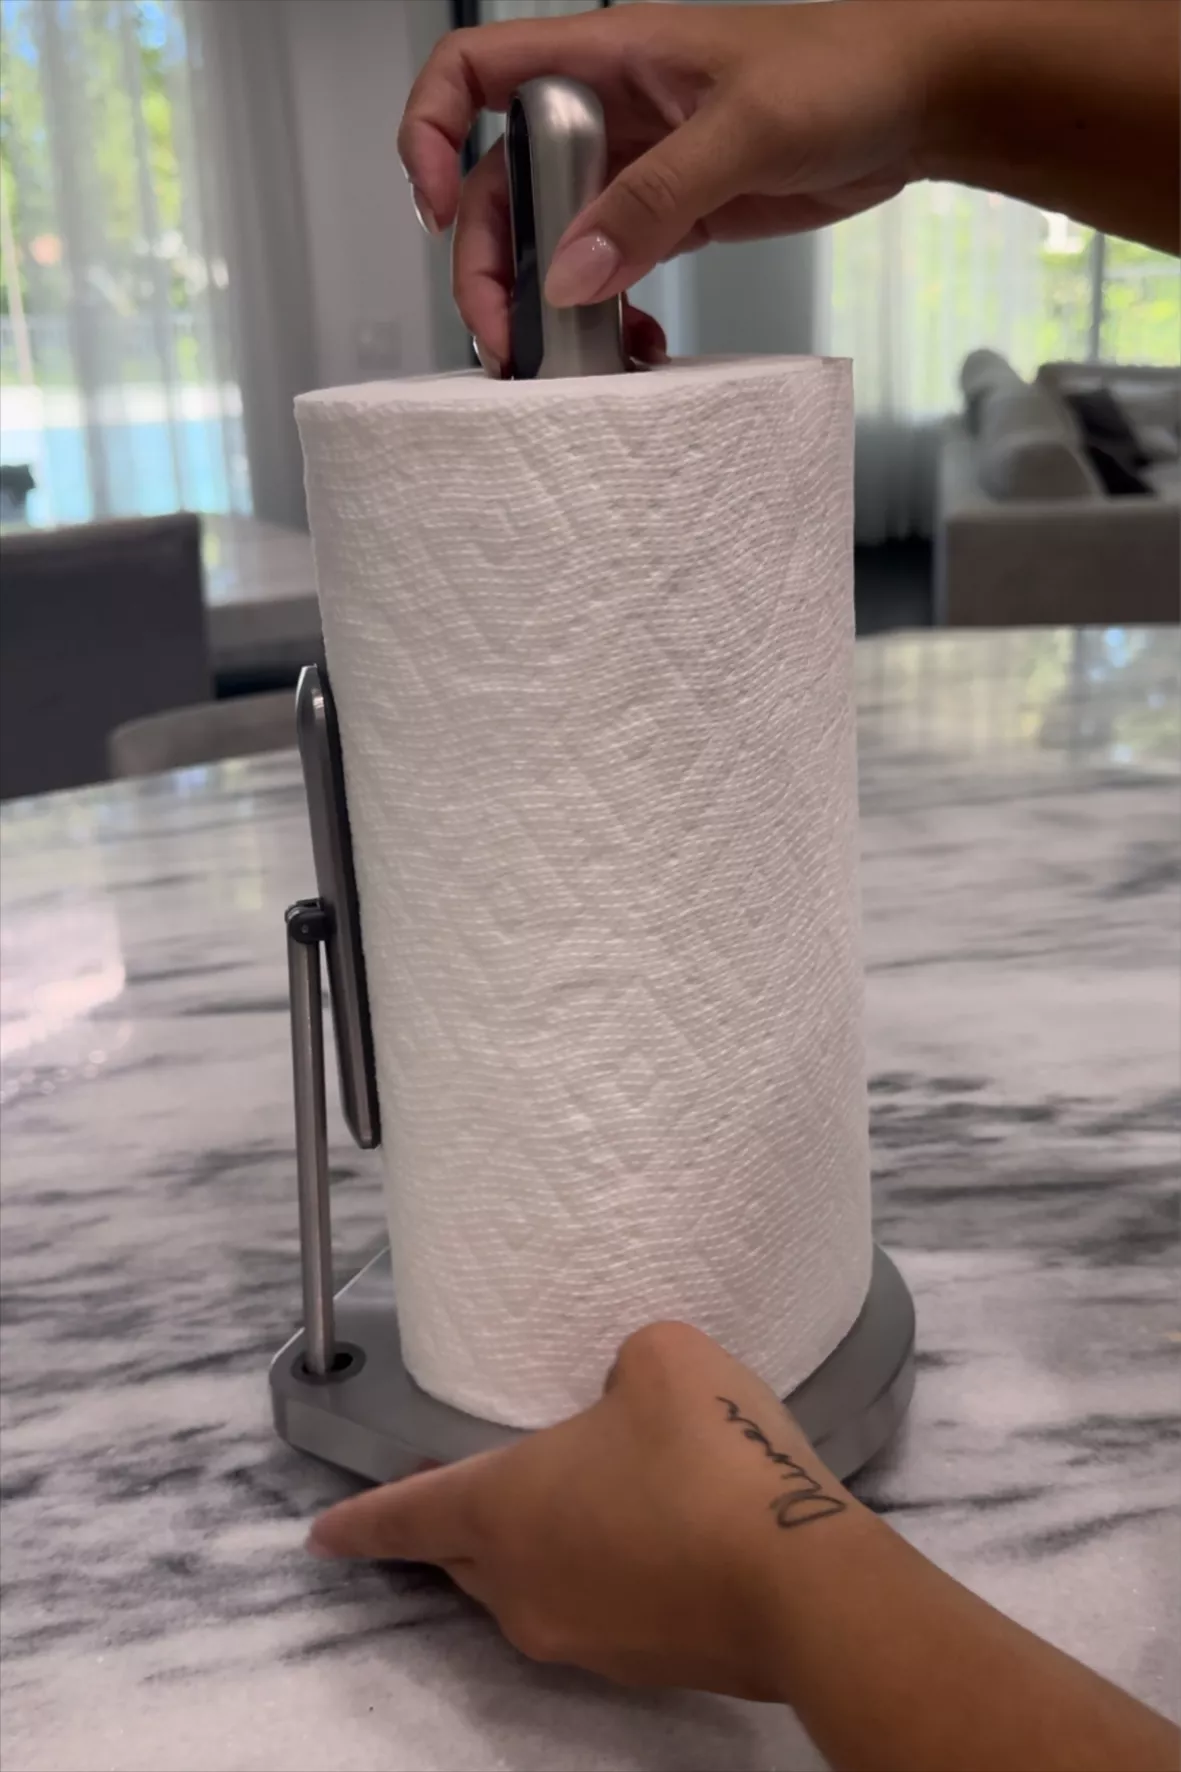 simplehuman Paper Towel Holder